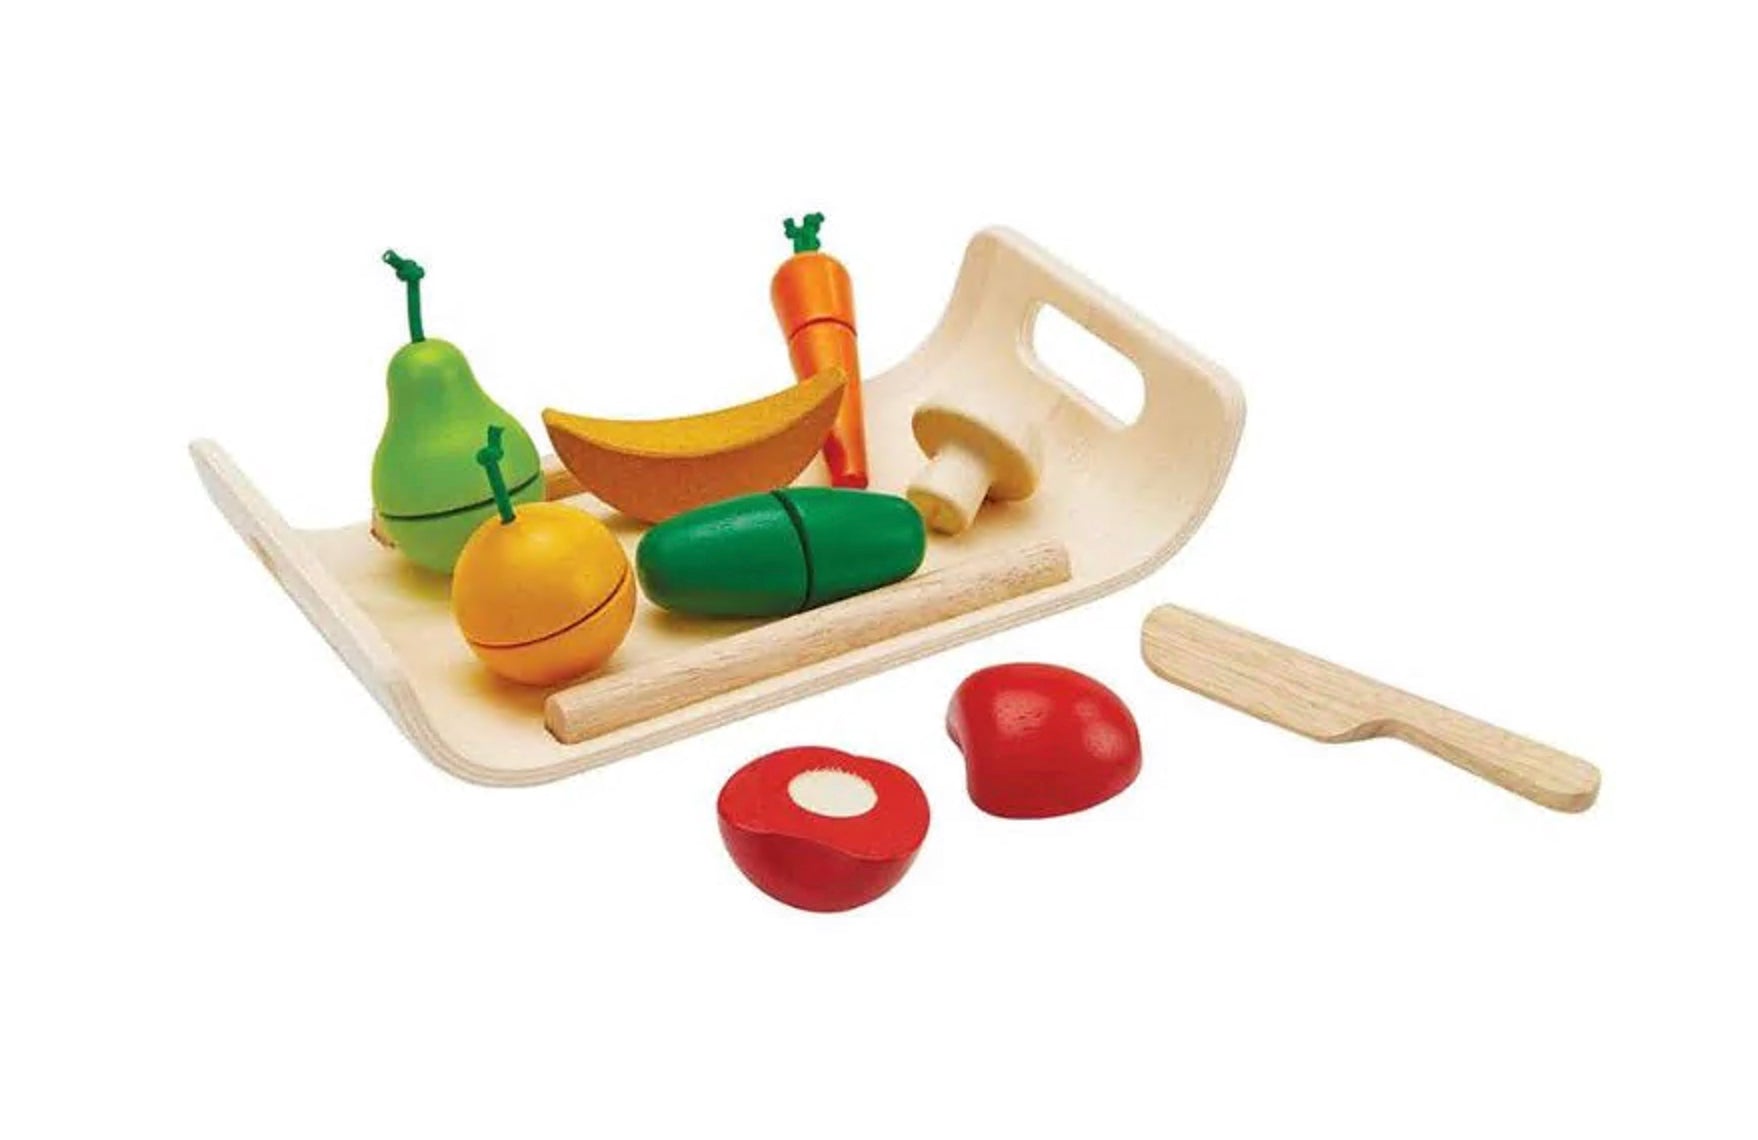 Plan Toys Assorted Fruit Set